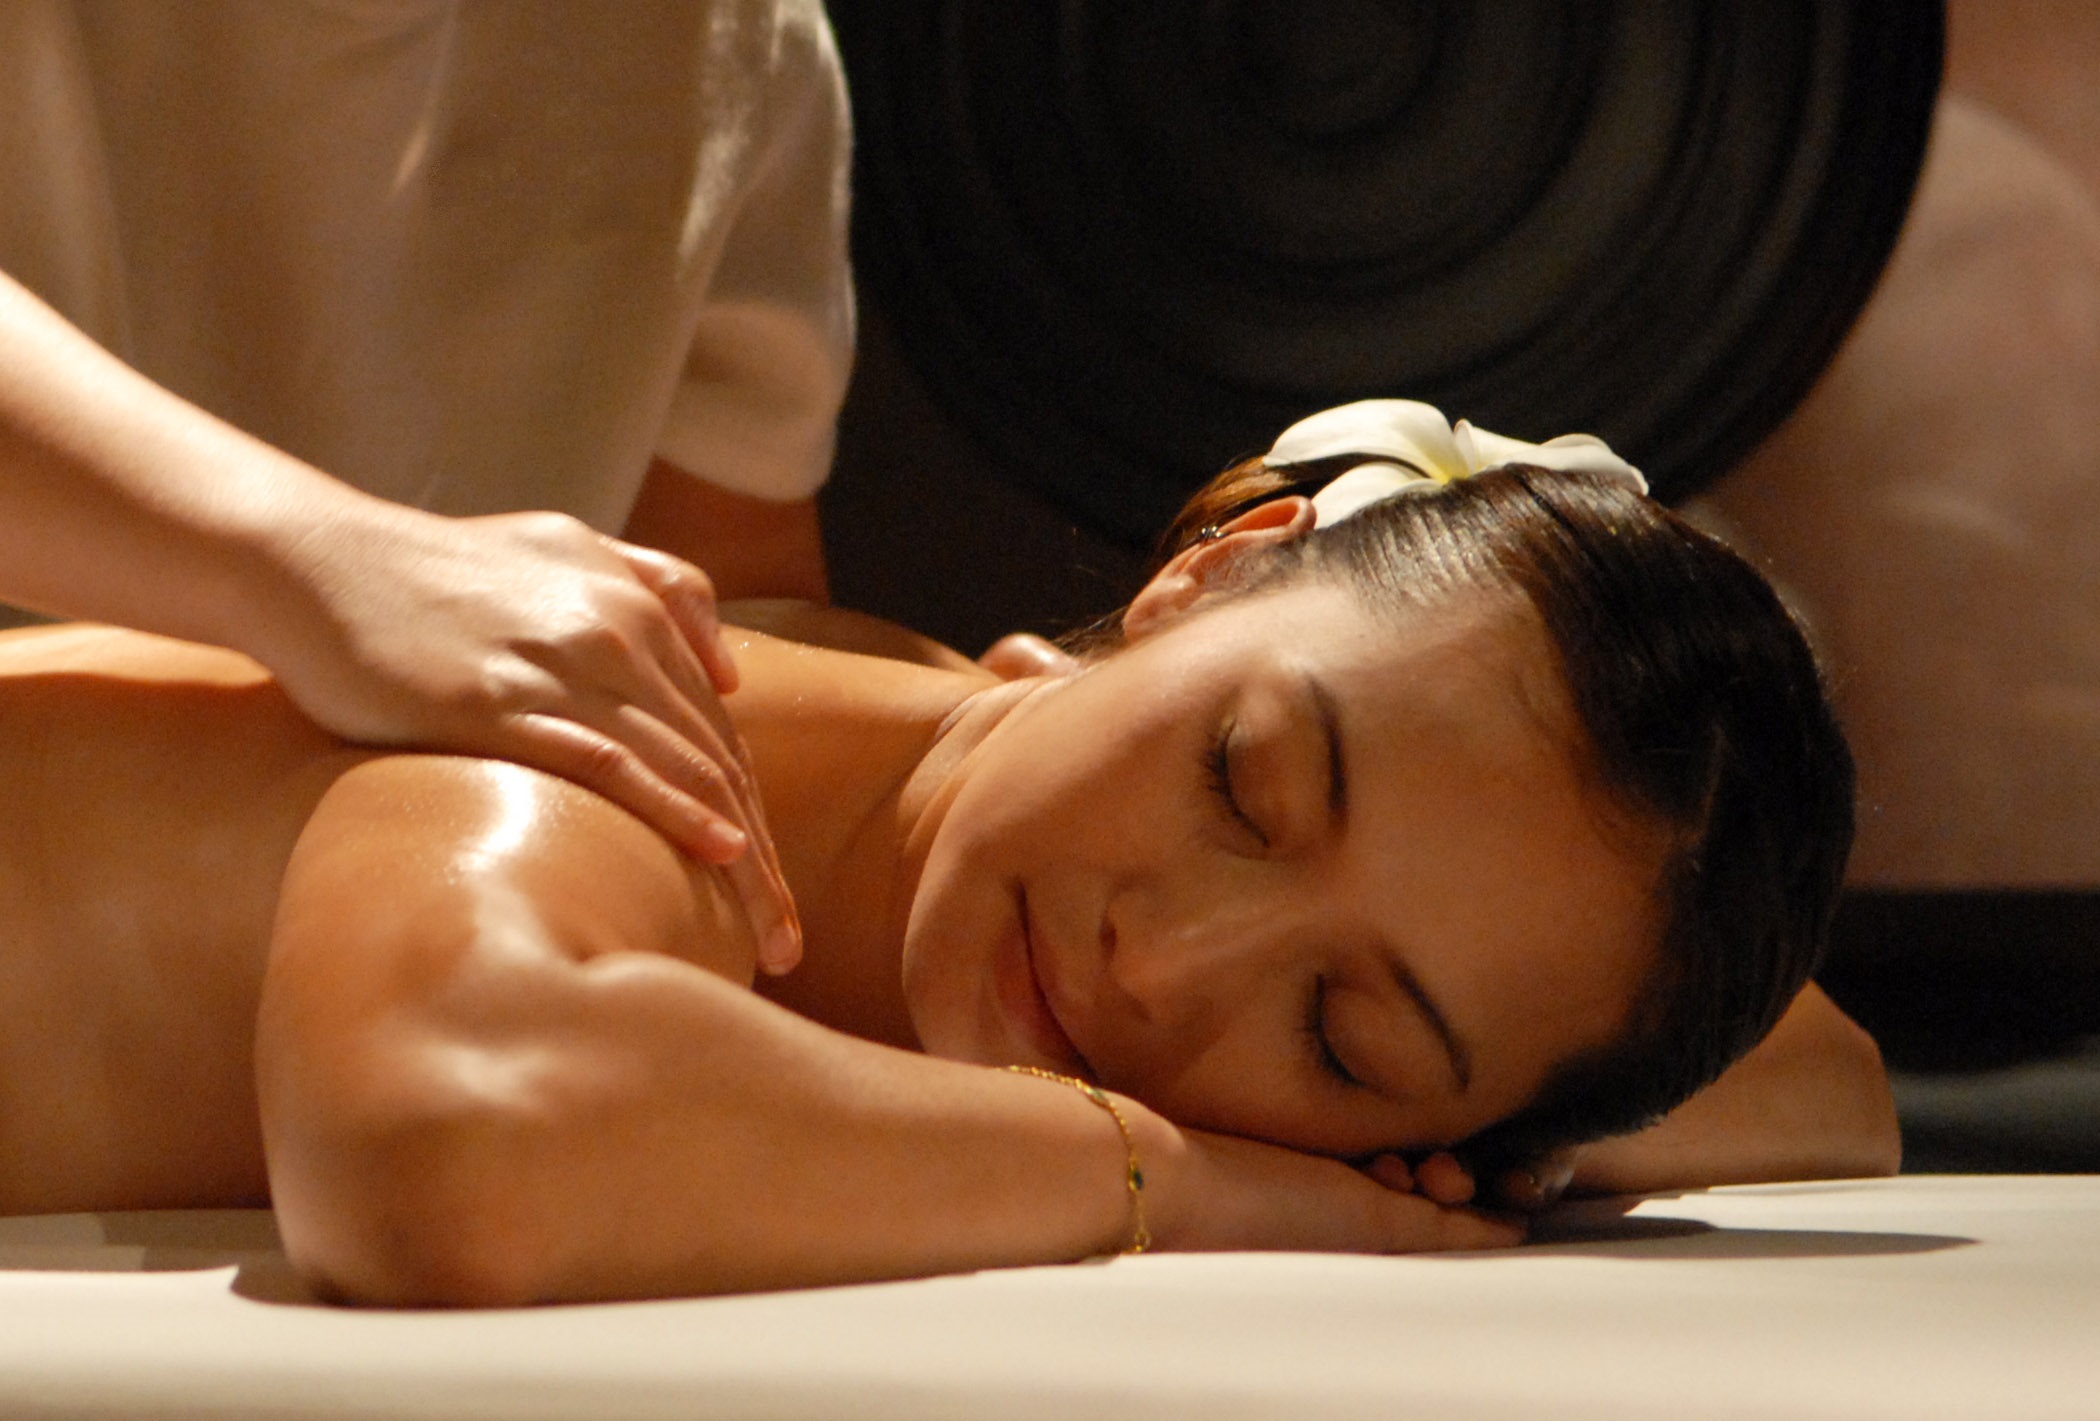 Japanese Massage Full Movie florence henderson